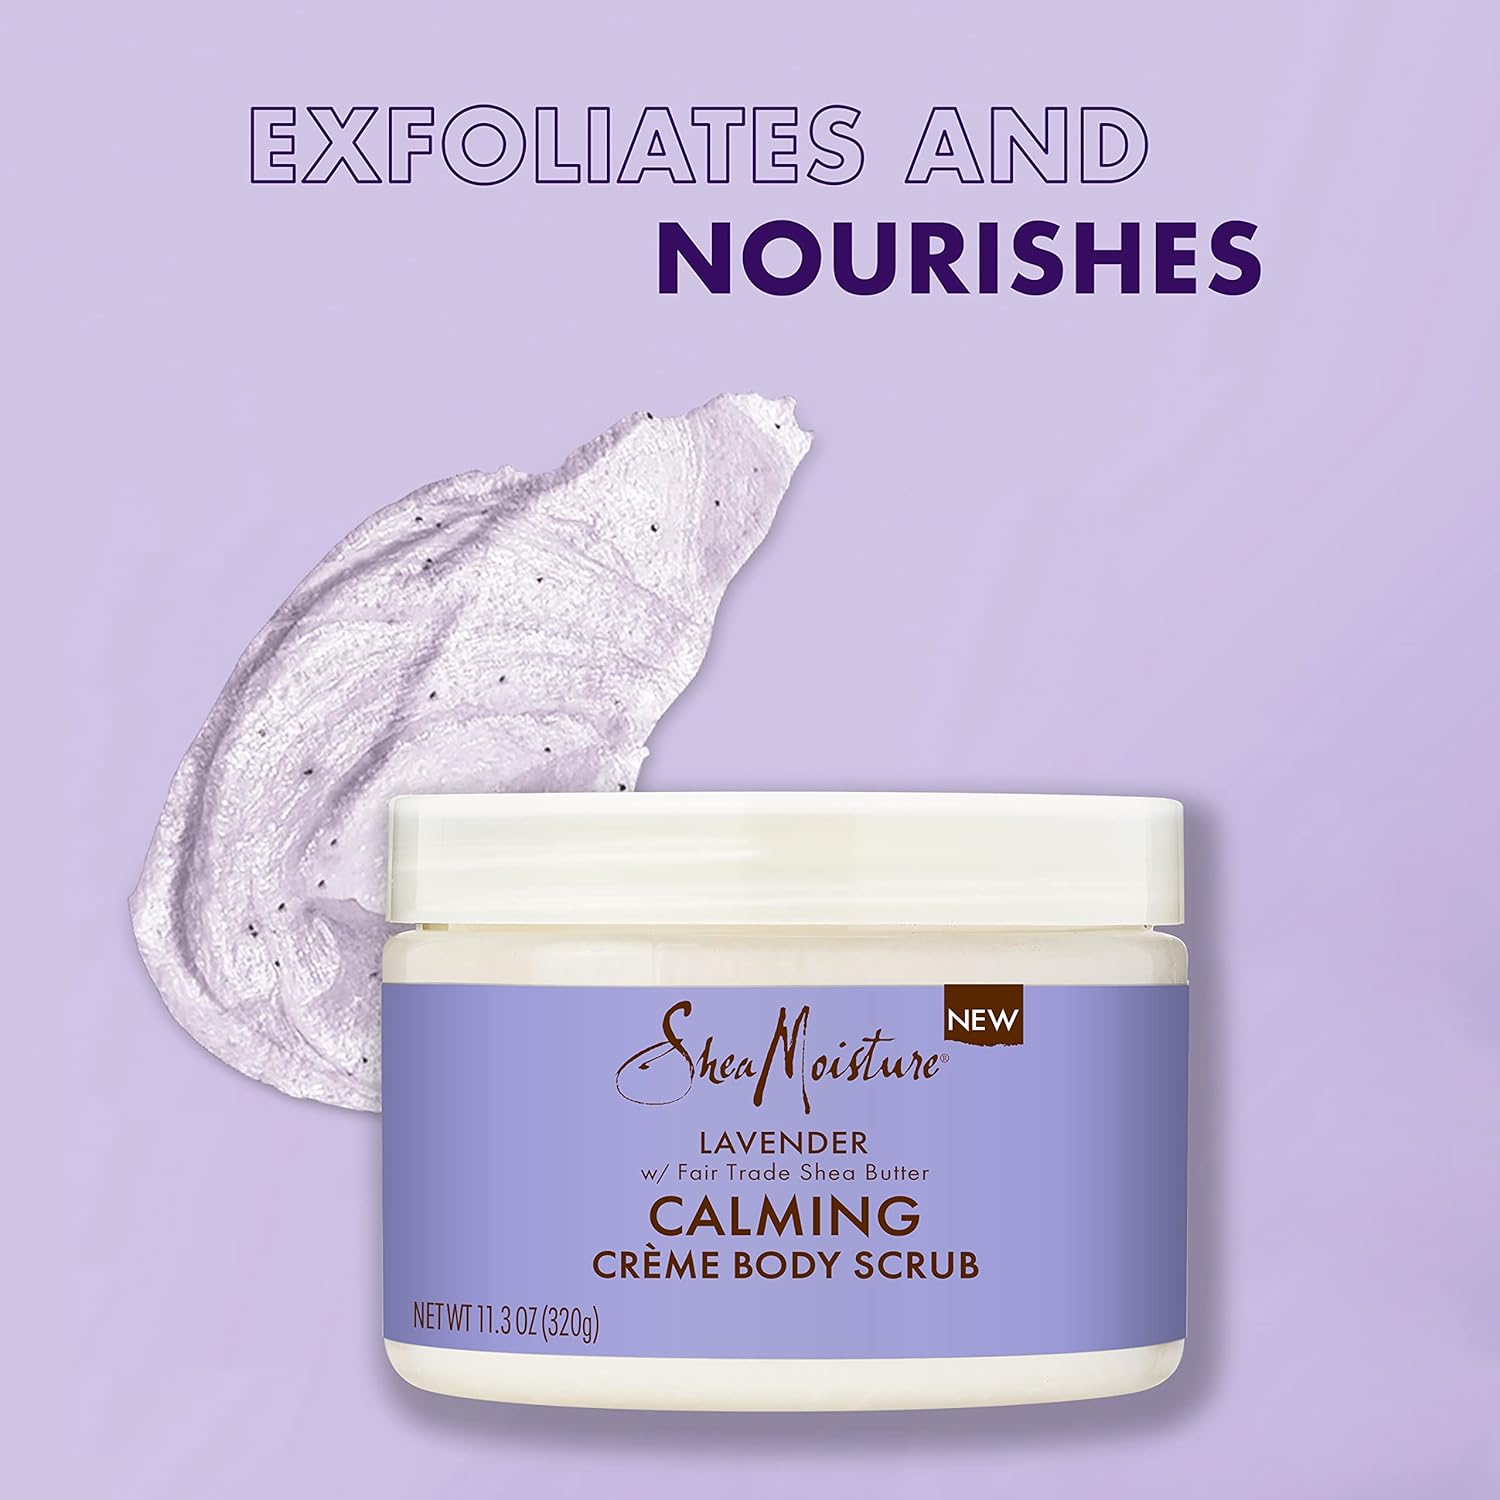 SheaMoisture Creme Body Scrub Lavender Calming Skin Care with Fair Trade Shea Butter 11.3 oz : Beauty & Personal Care